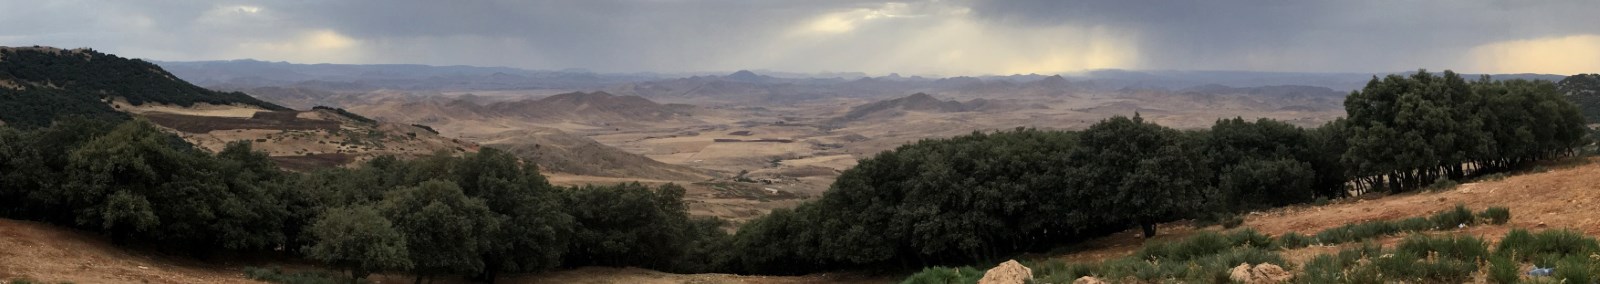 Moyen Atlas, Maroc